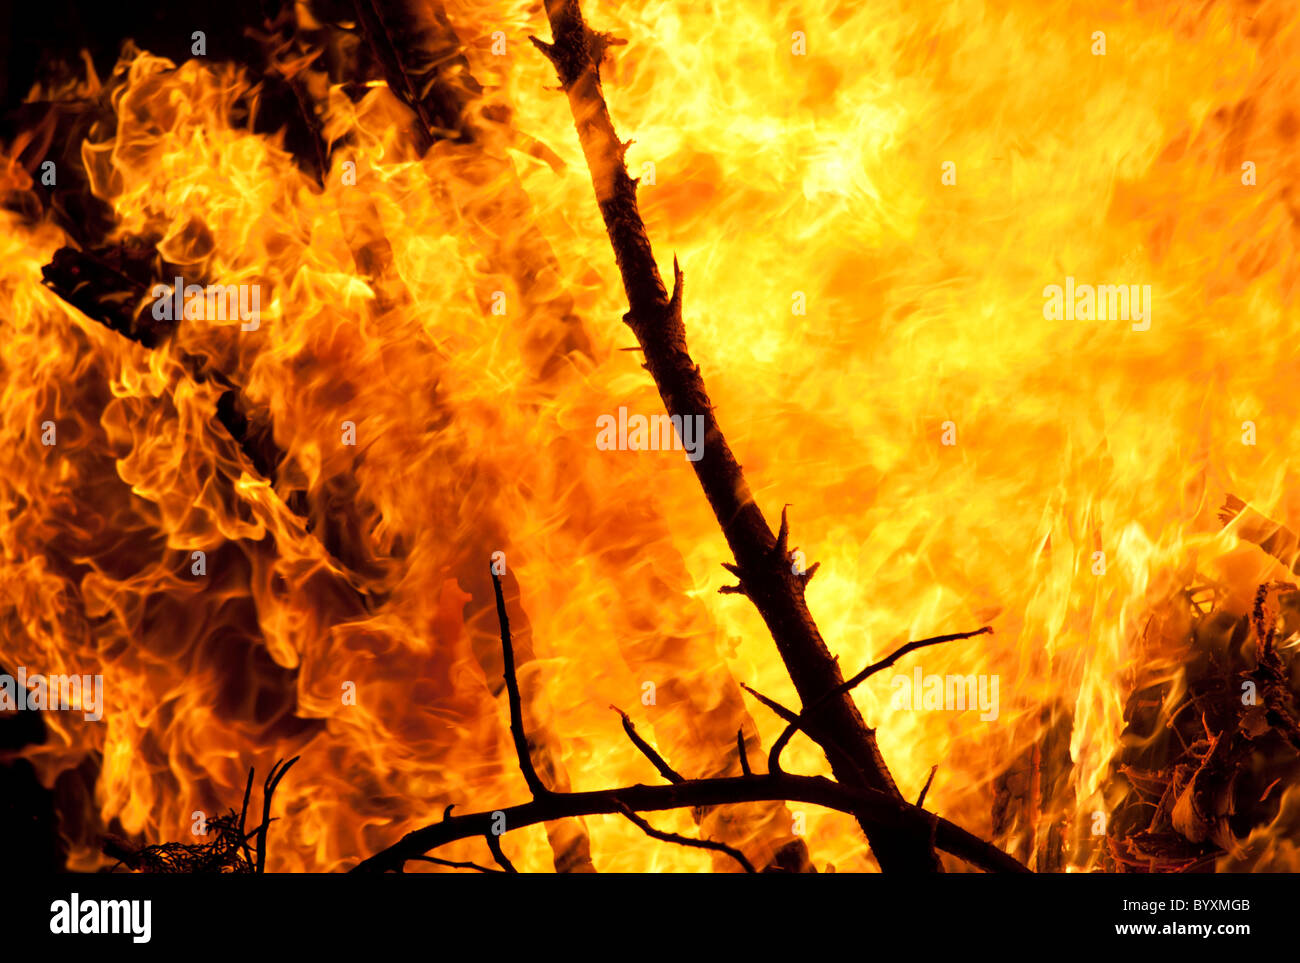 Closeup of the blazing orange fire. Stock Photo